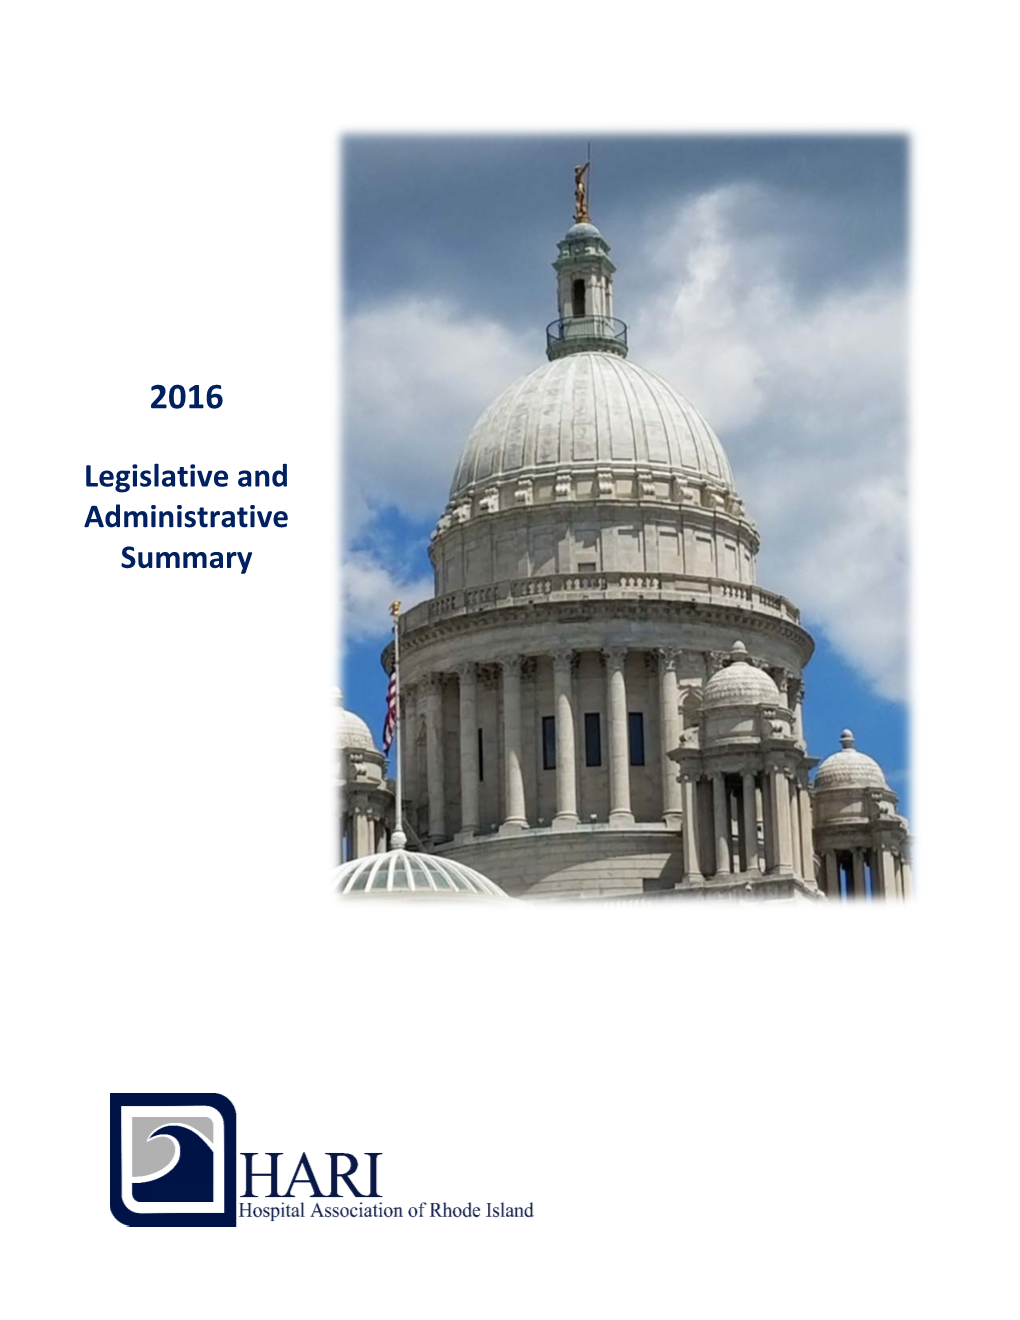 Legislative and Administrative Summary